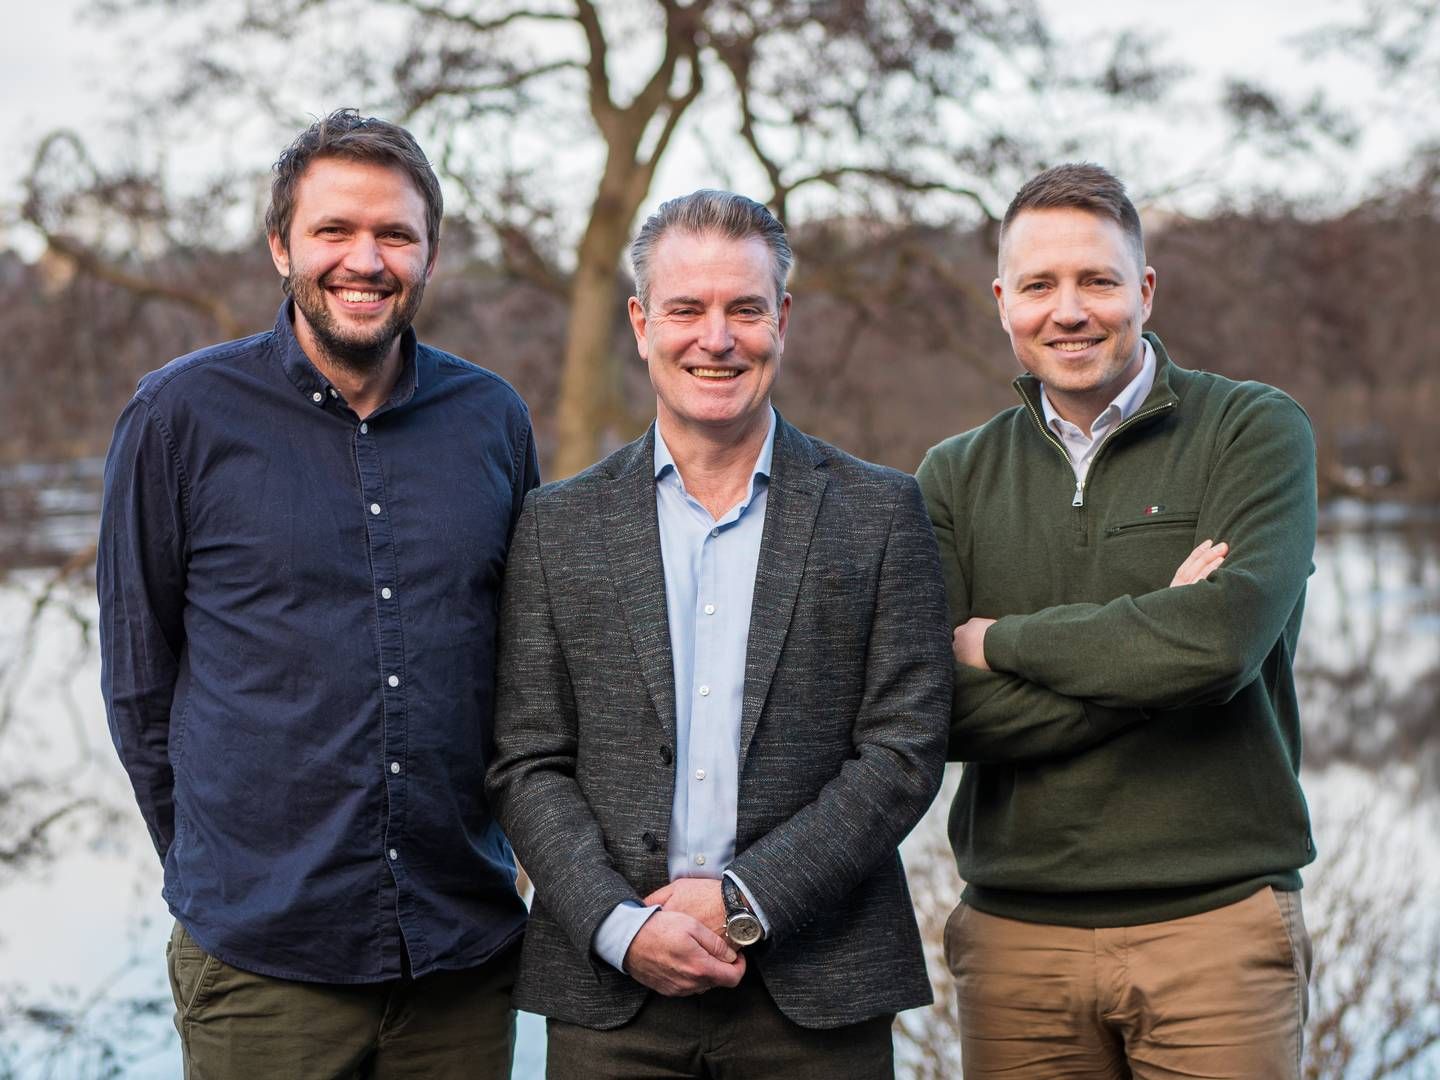 Founders of Ugly Duckling Ventures, Rune Hven-Jensen and Andreas Green-Rasmussen, with Nils Johannesen (center). | Photo: Jacob Overgaard